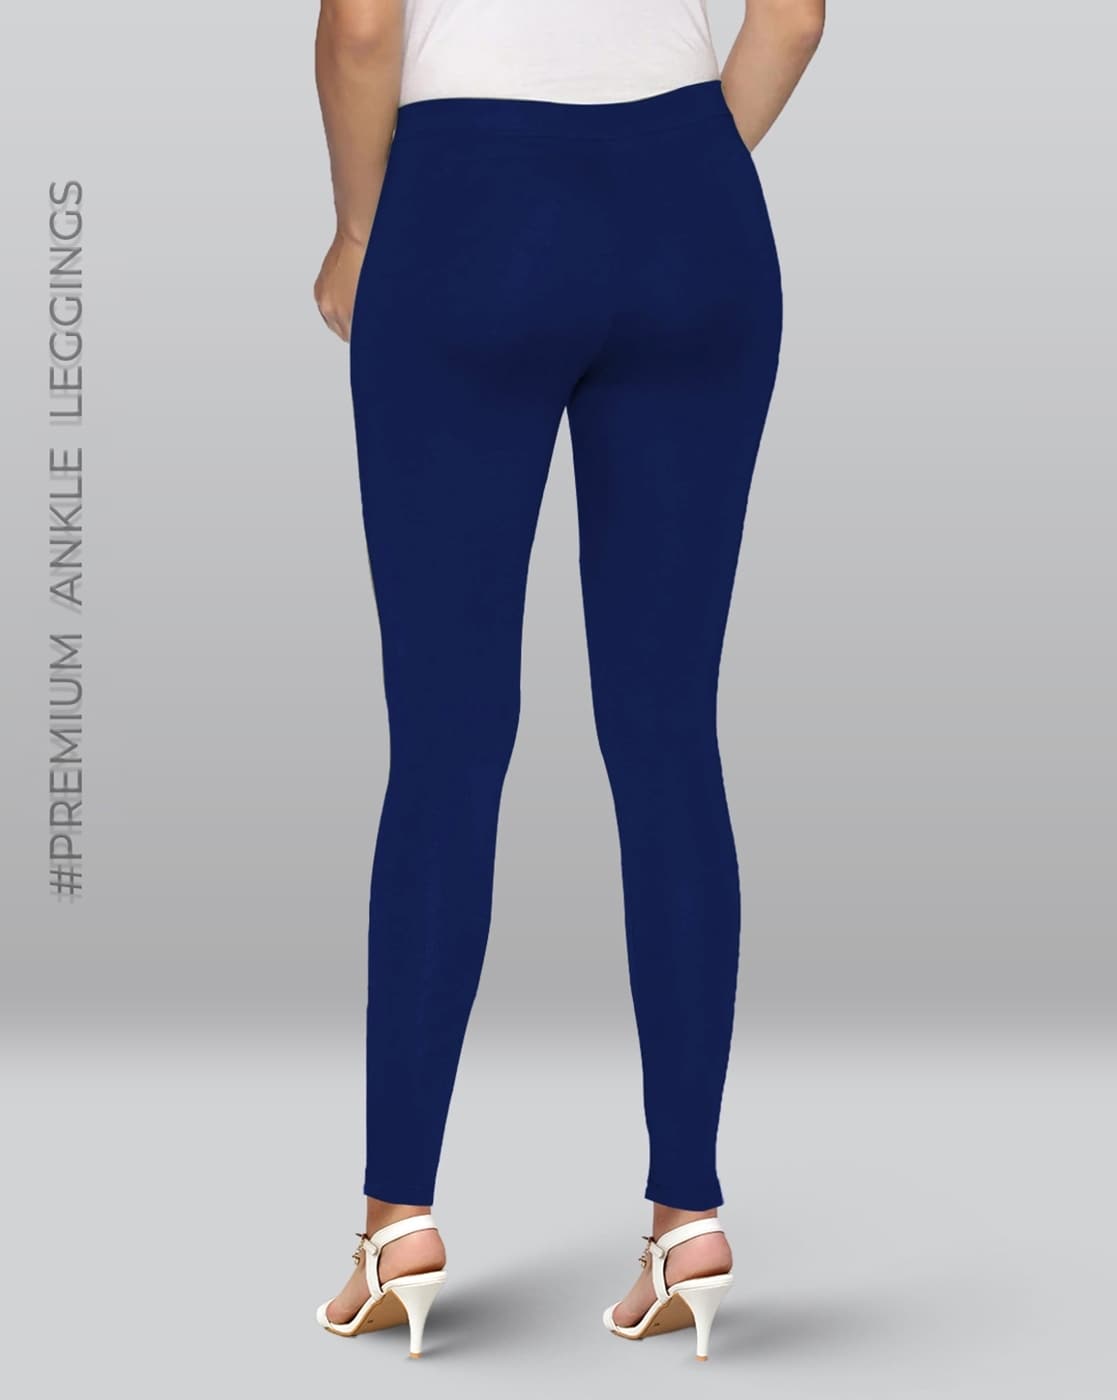 Buy Blue & Dark Skin Leggings for Women by GRACIT Online | Ajio.com